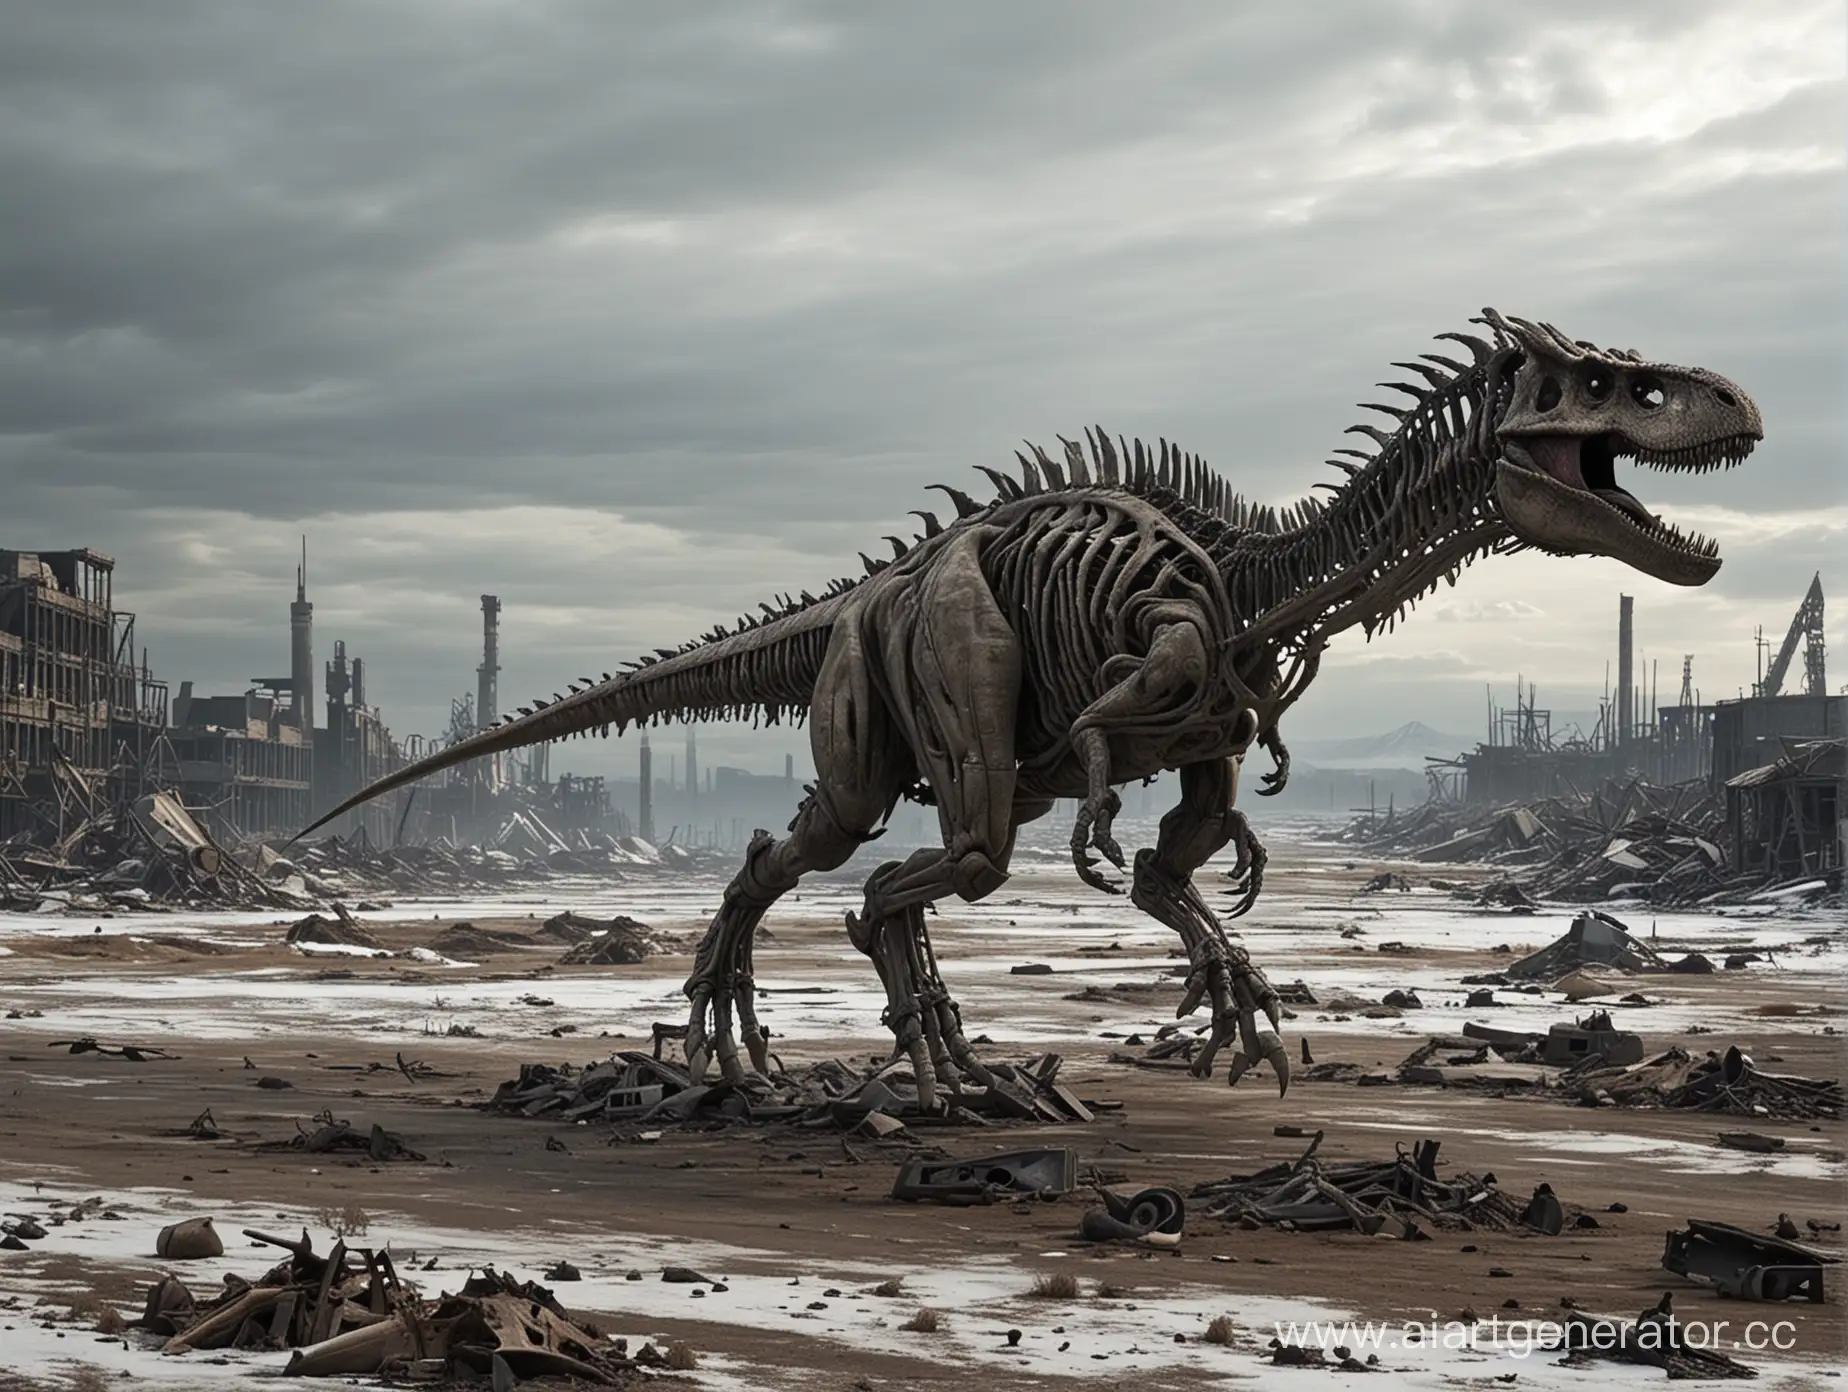 Mutant-Dinosaur-Roaming-Human-Bone-Wastelands-during-Nuclear-Winter